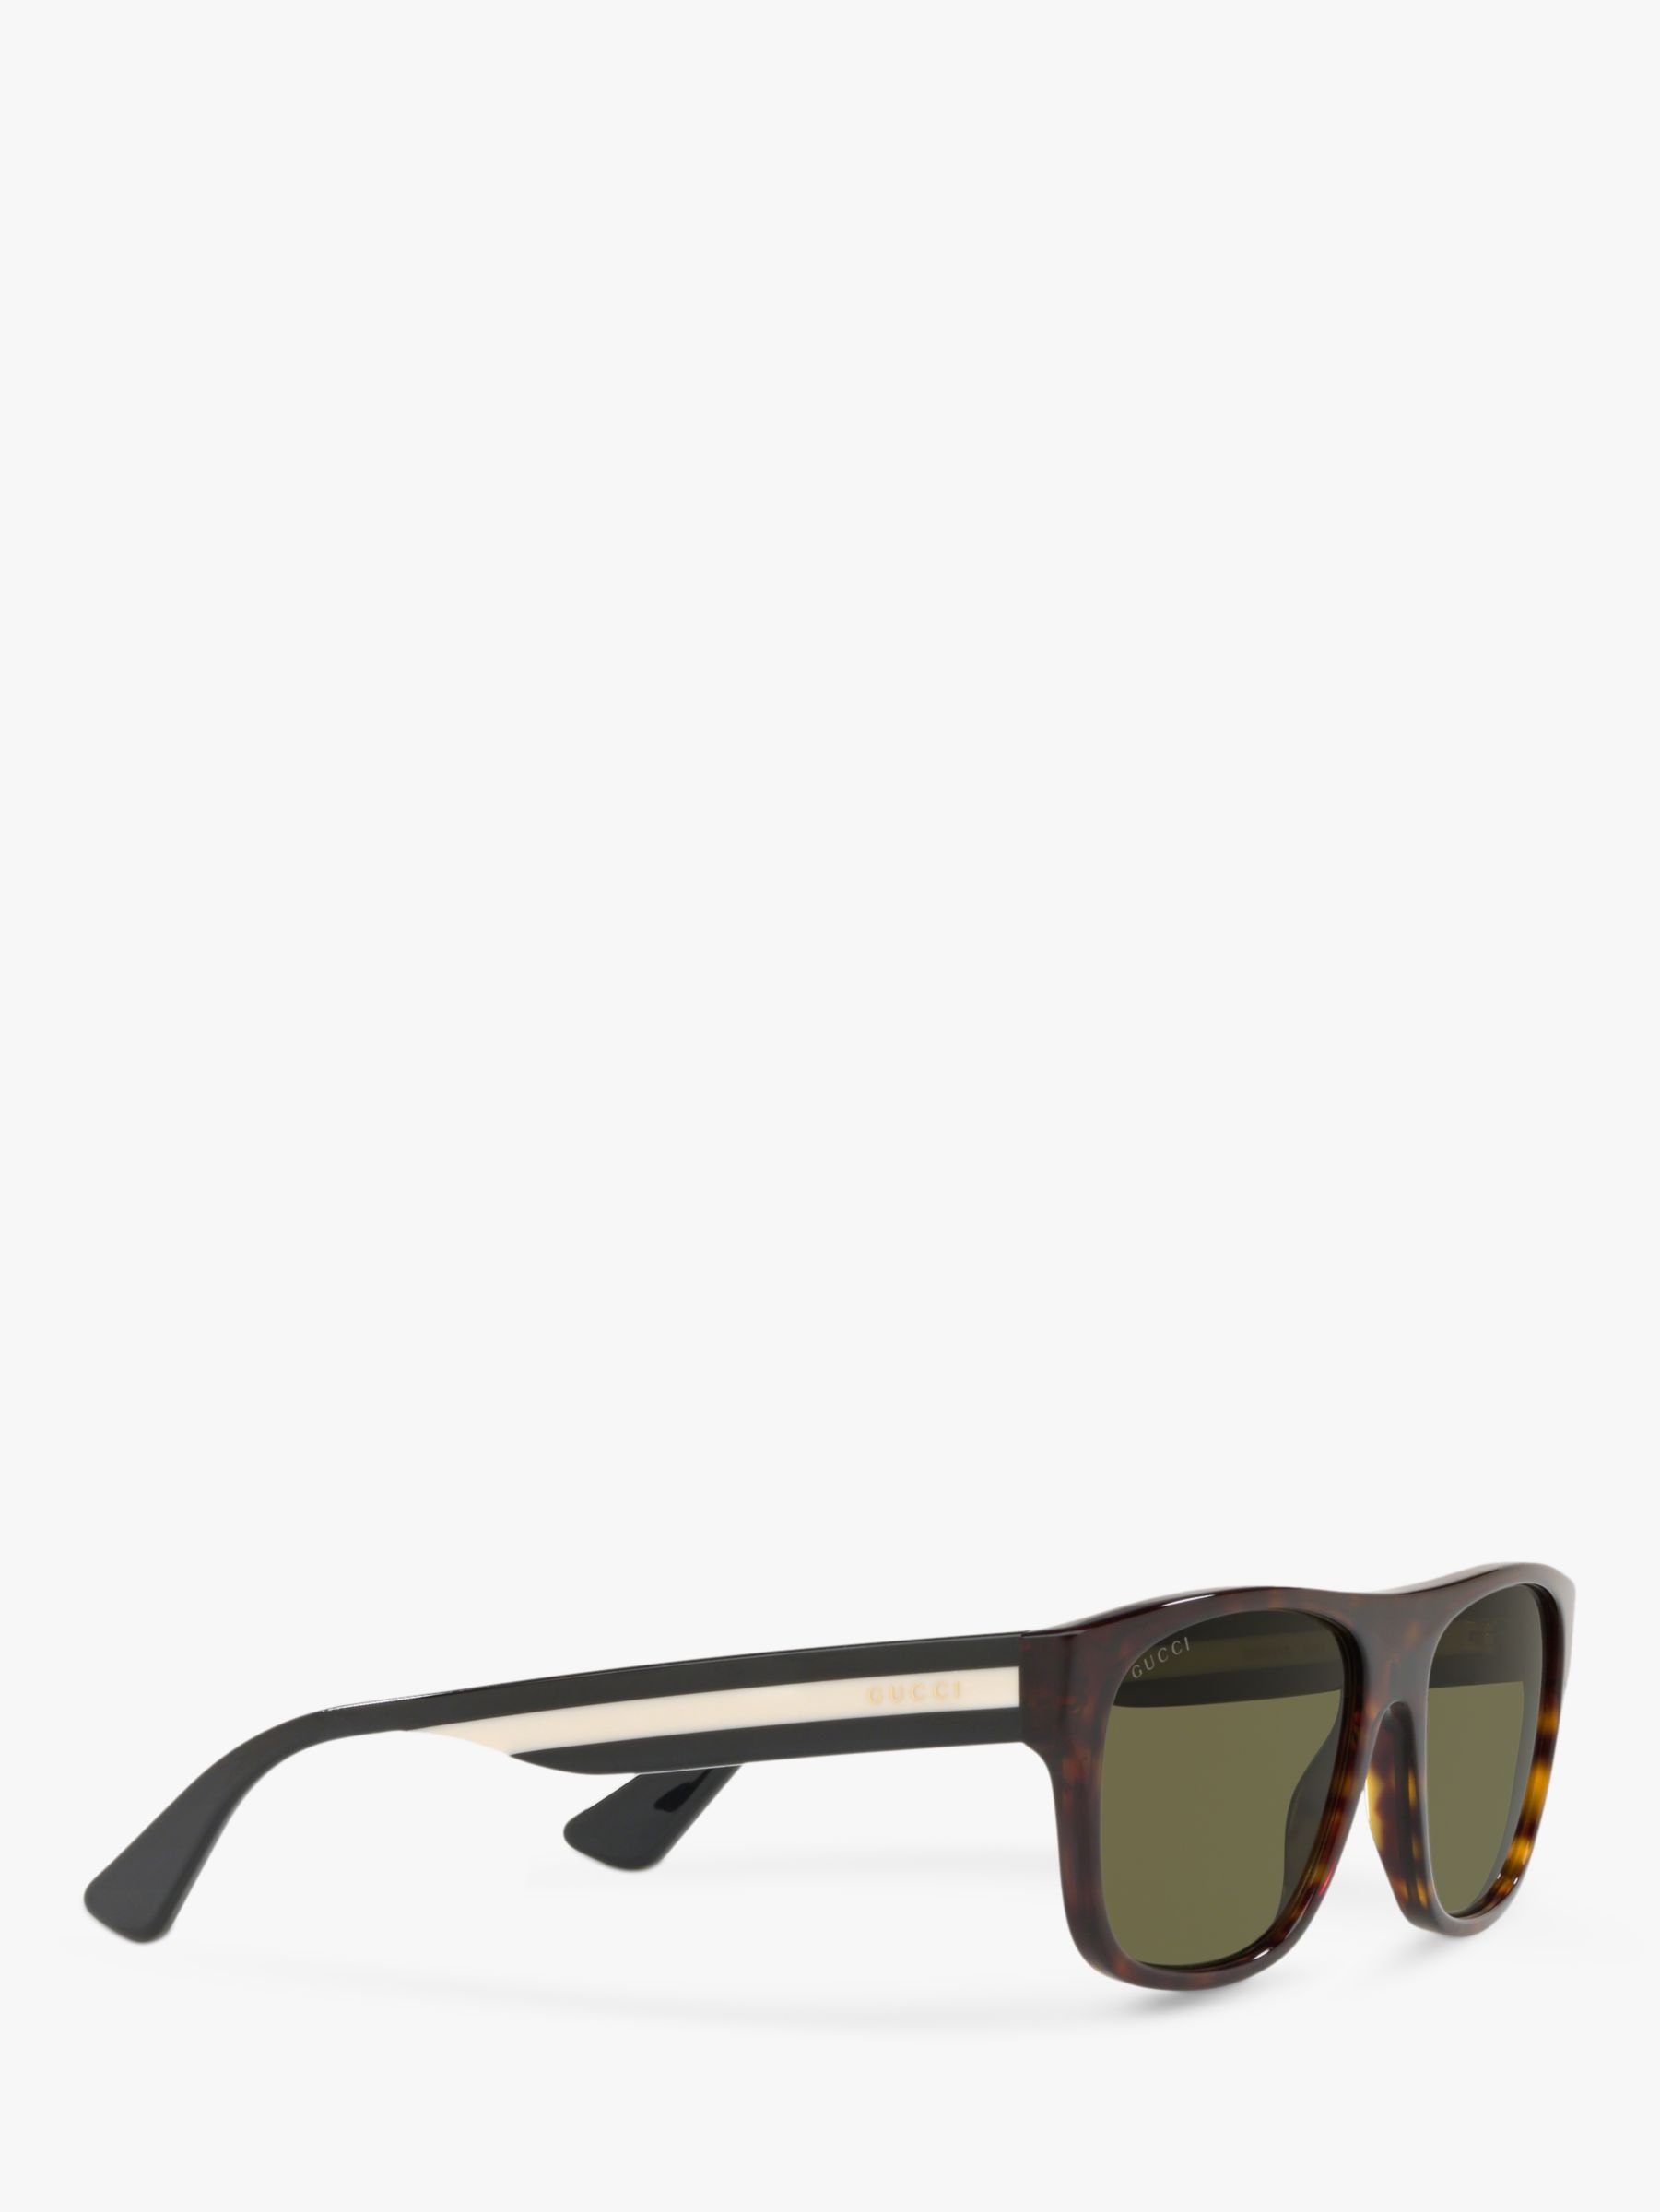 Gucci GG0341S Men's Rectangular Sunglasses, Tortoise/Green at John ...